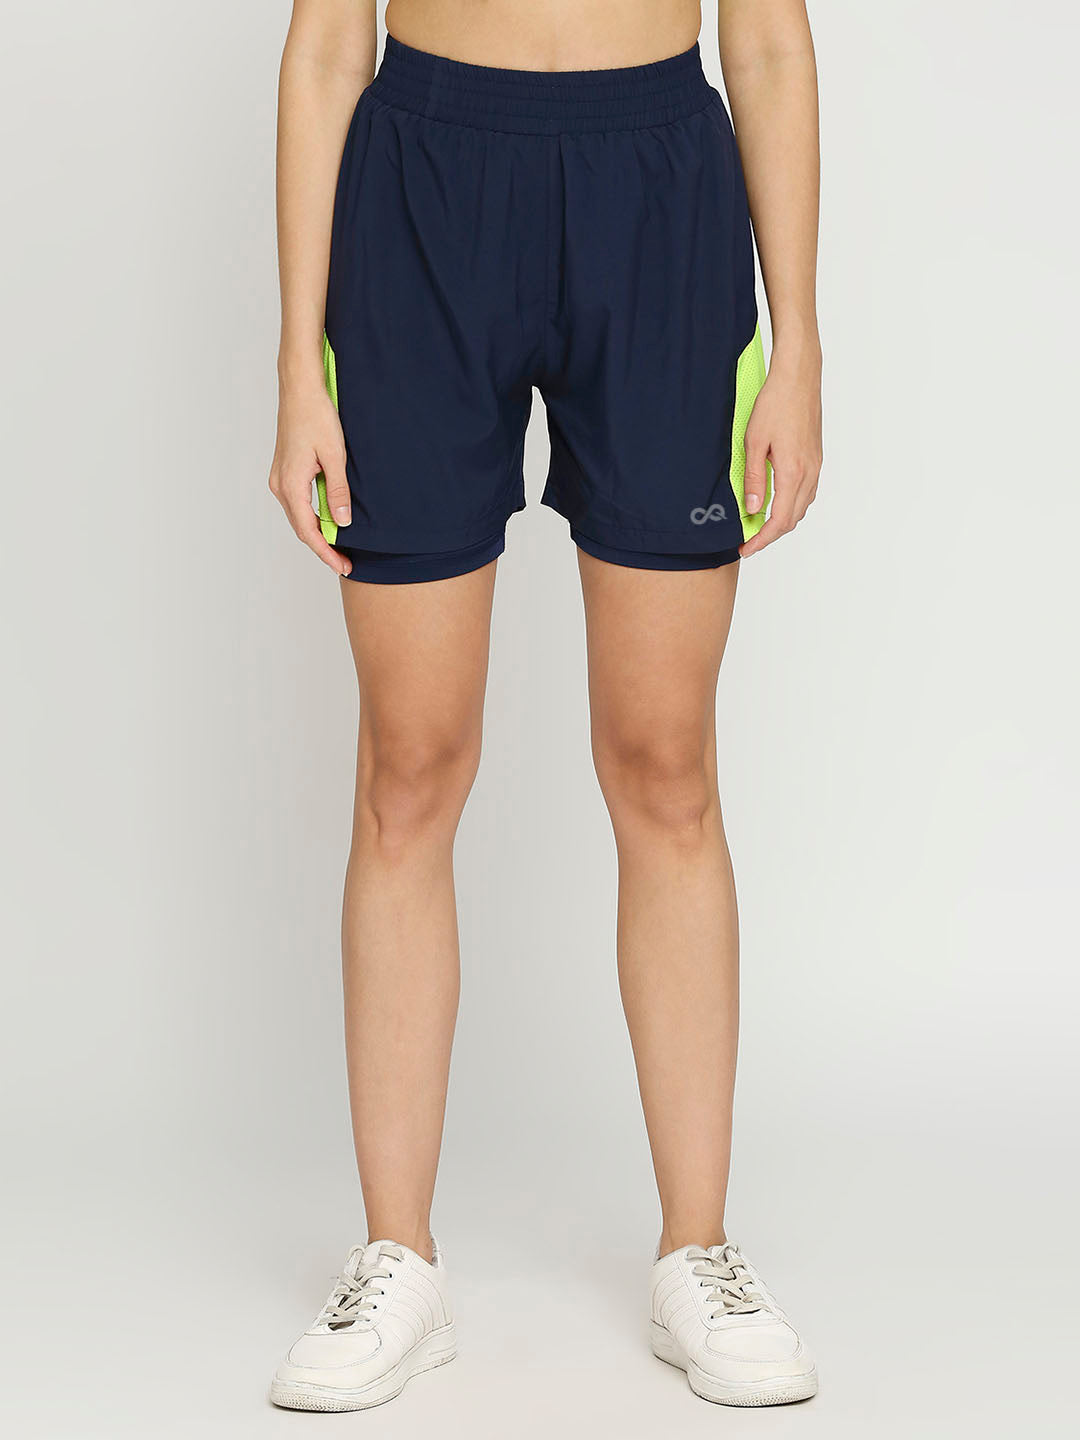 Women's Activewear Shorts - Navy Blue